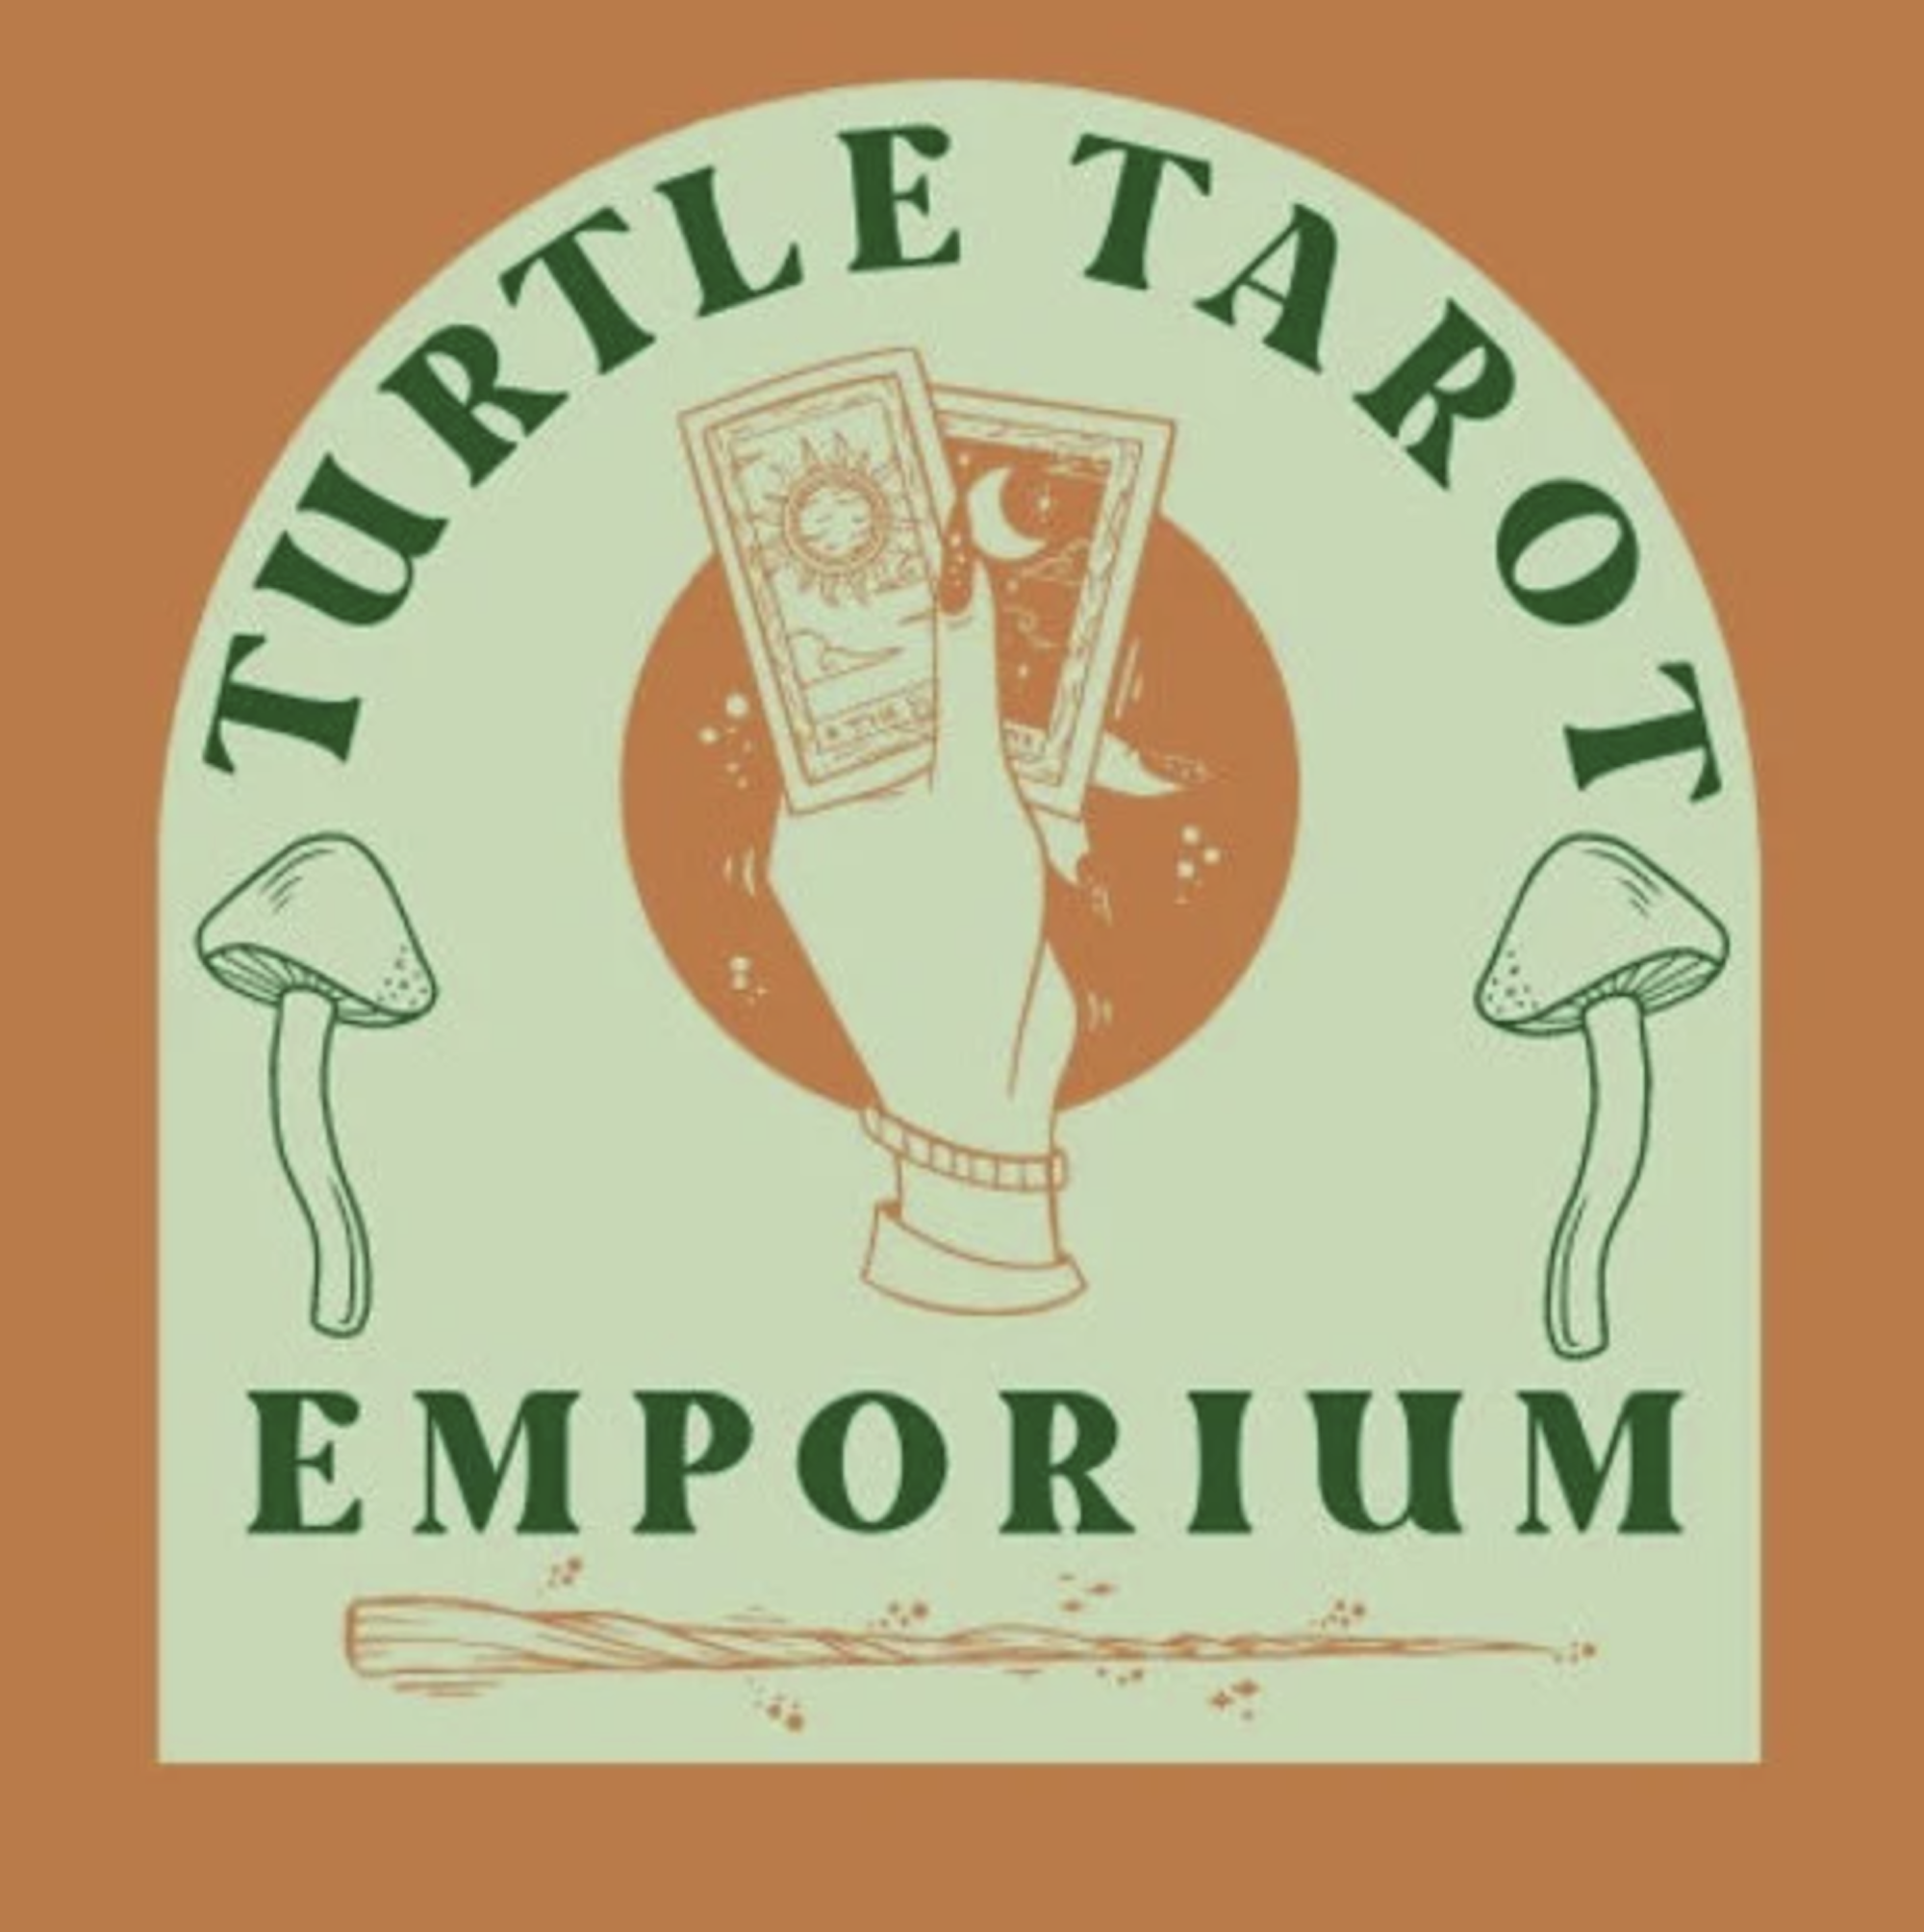 Turtle Tarot logo